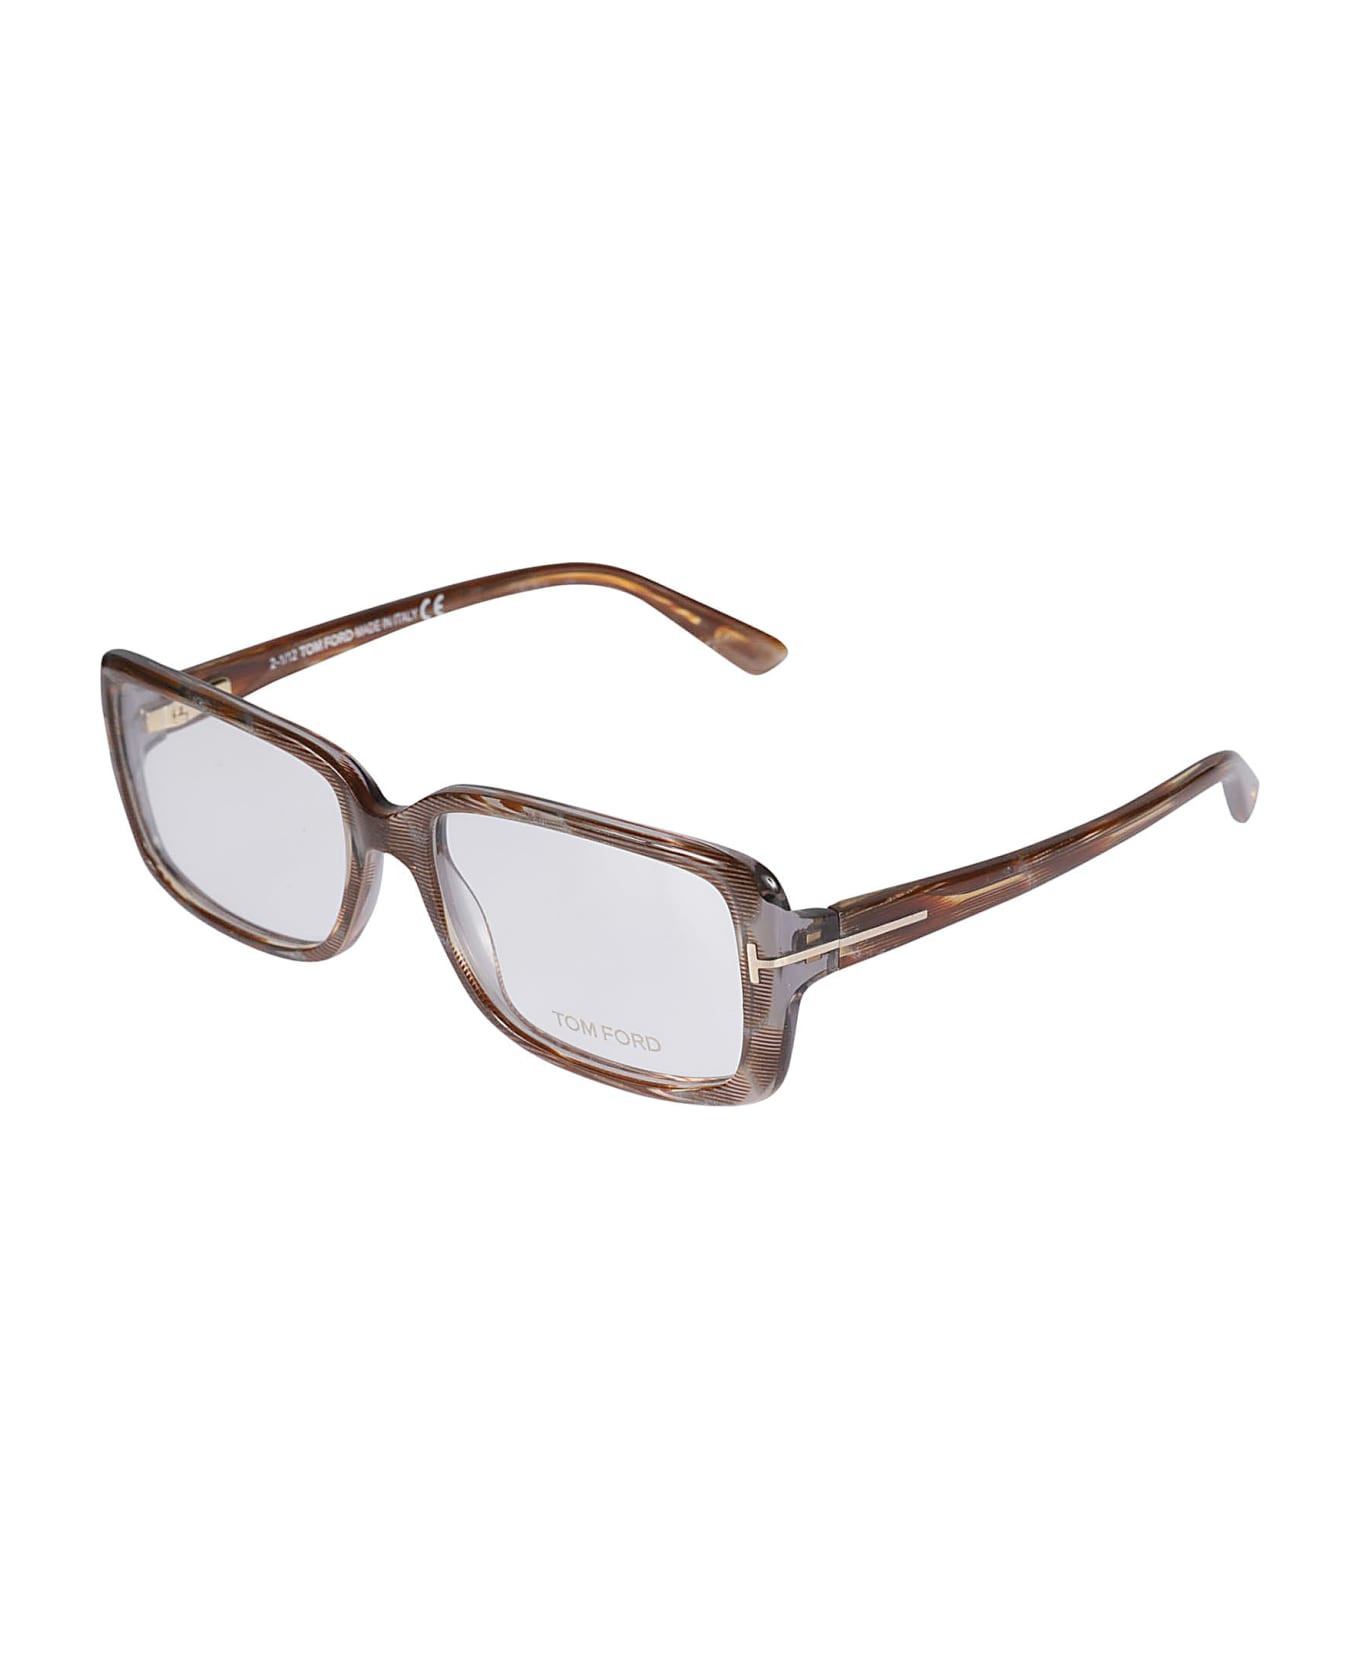 Tom Ford Eyewear Stripe Effect Frame Glasses - 059 アイウェア